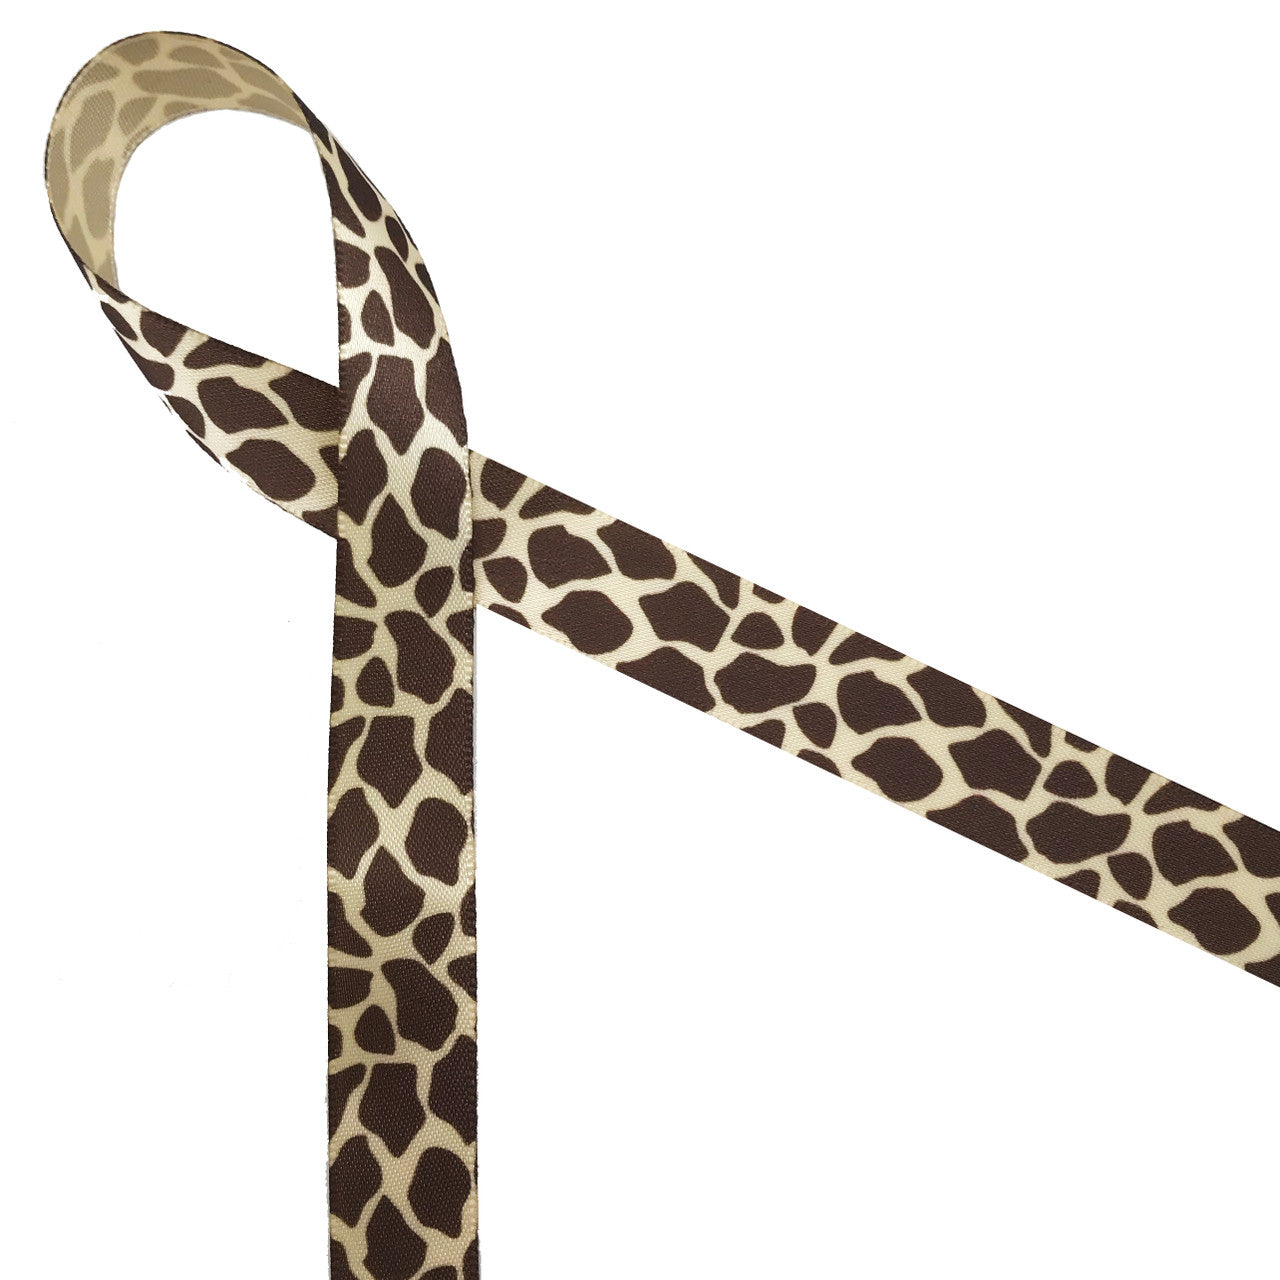 Giraffe print on 5/8" tan single face satin.